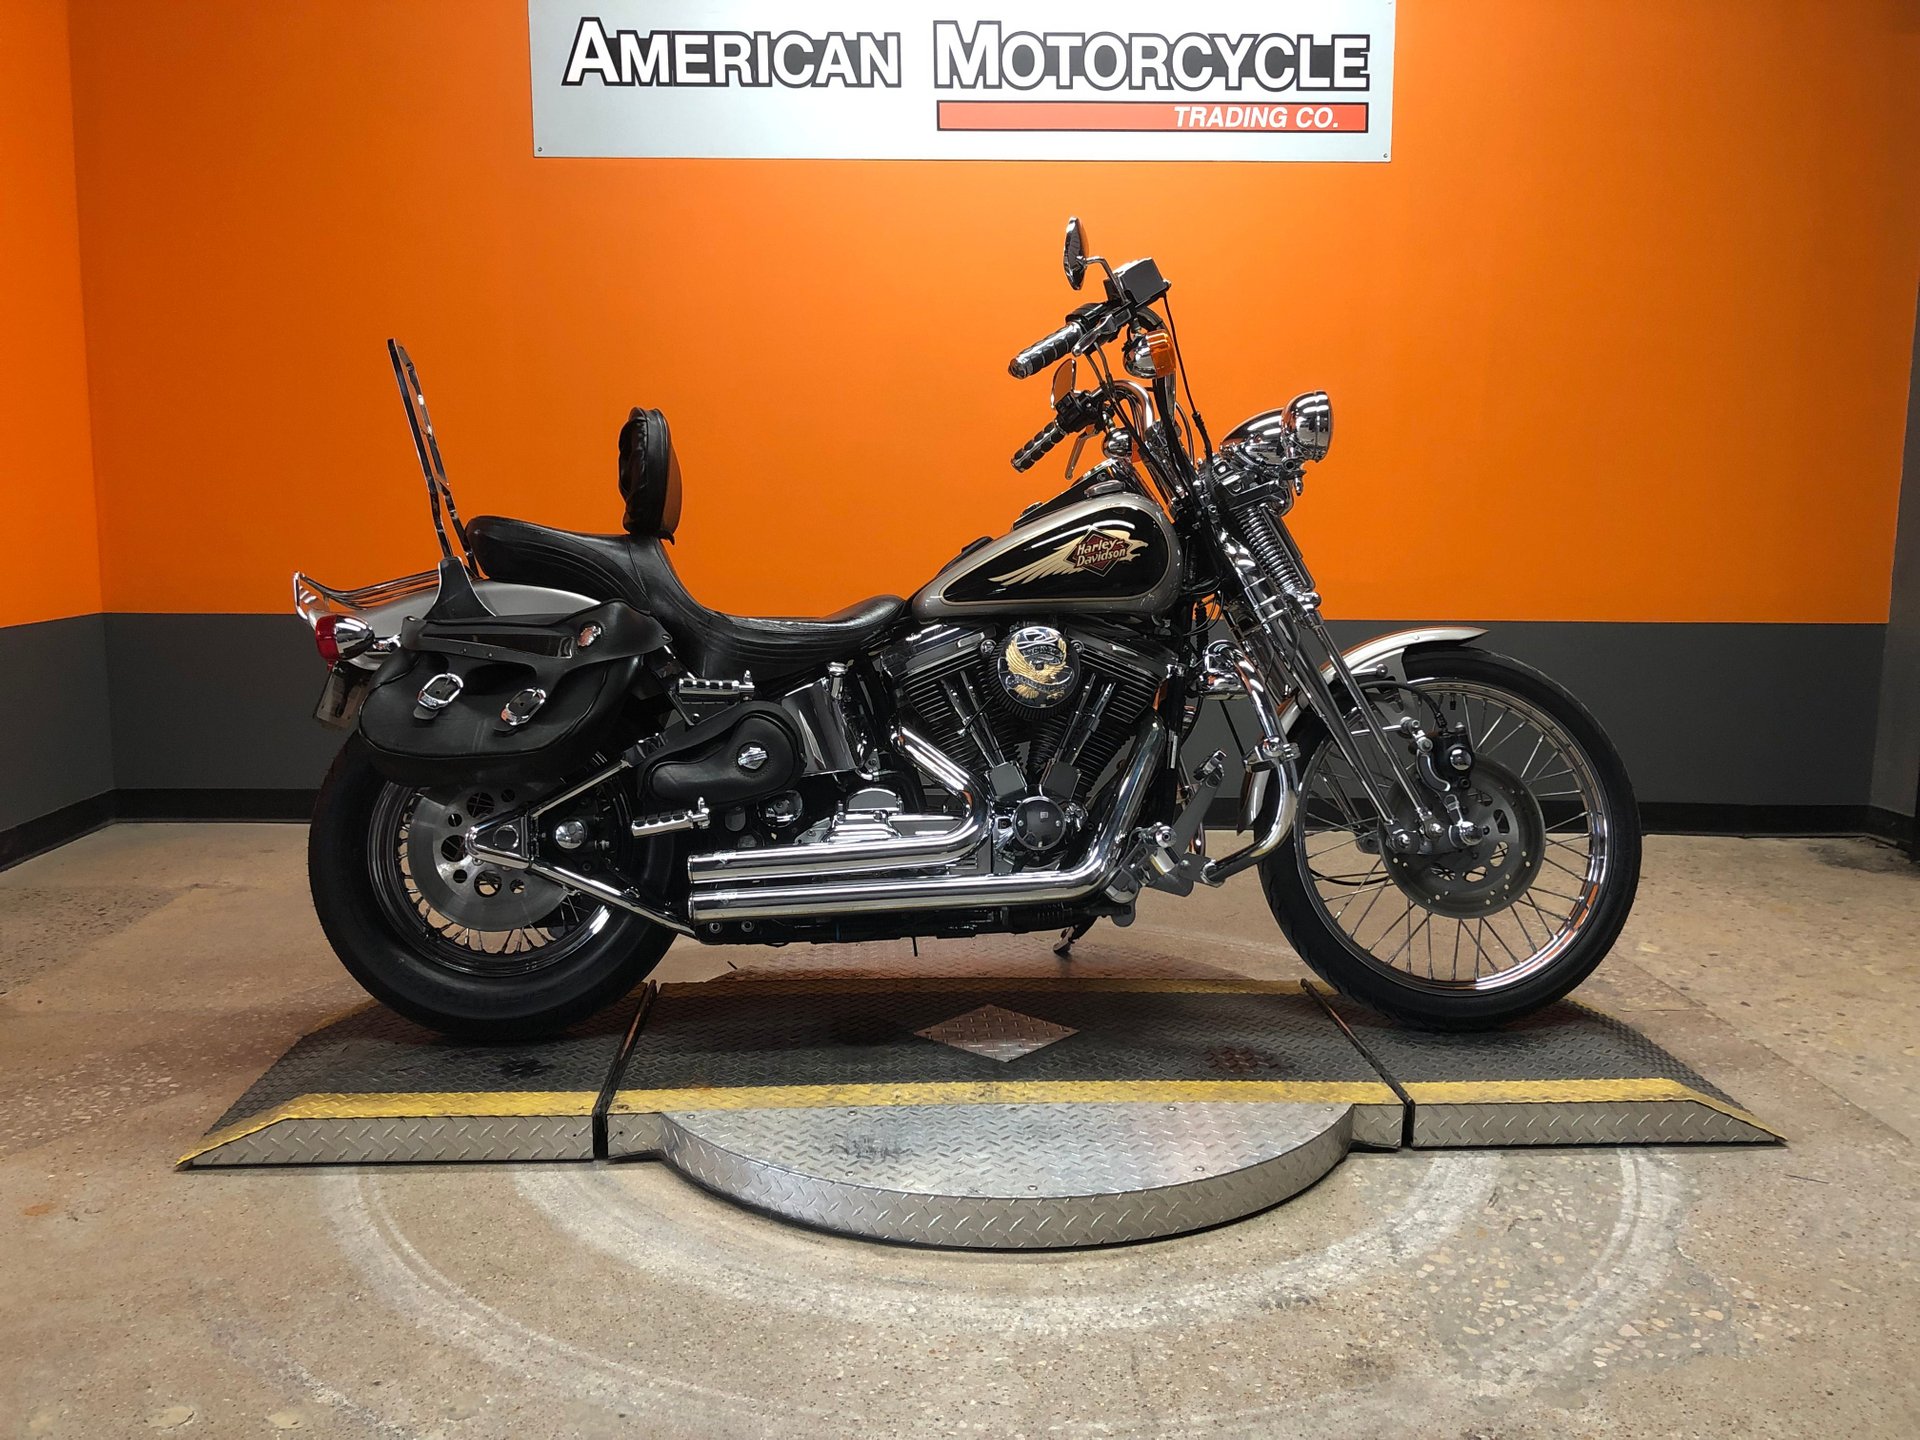 1993 Harley-Davidson Softail Springer | American Motorcycle Trading ...